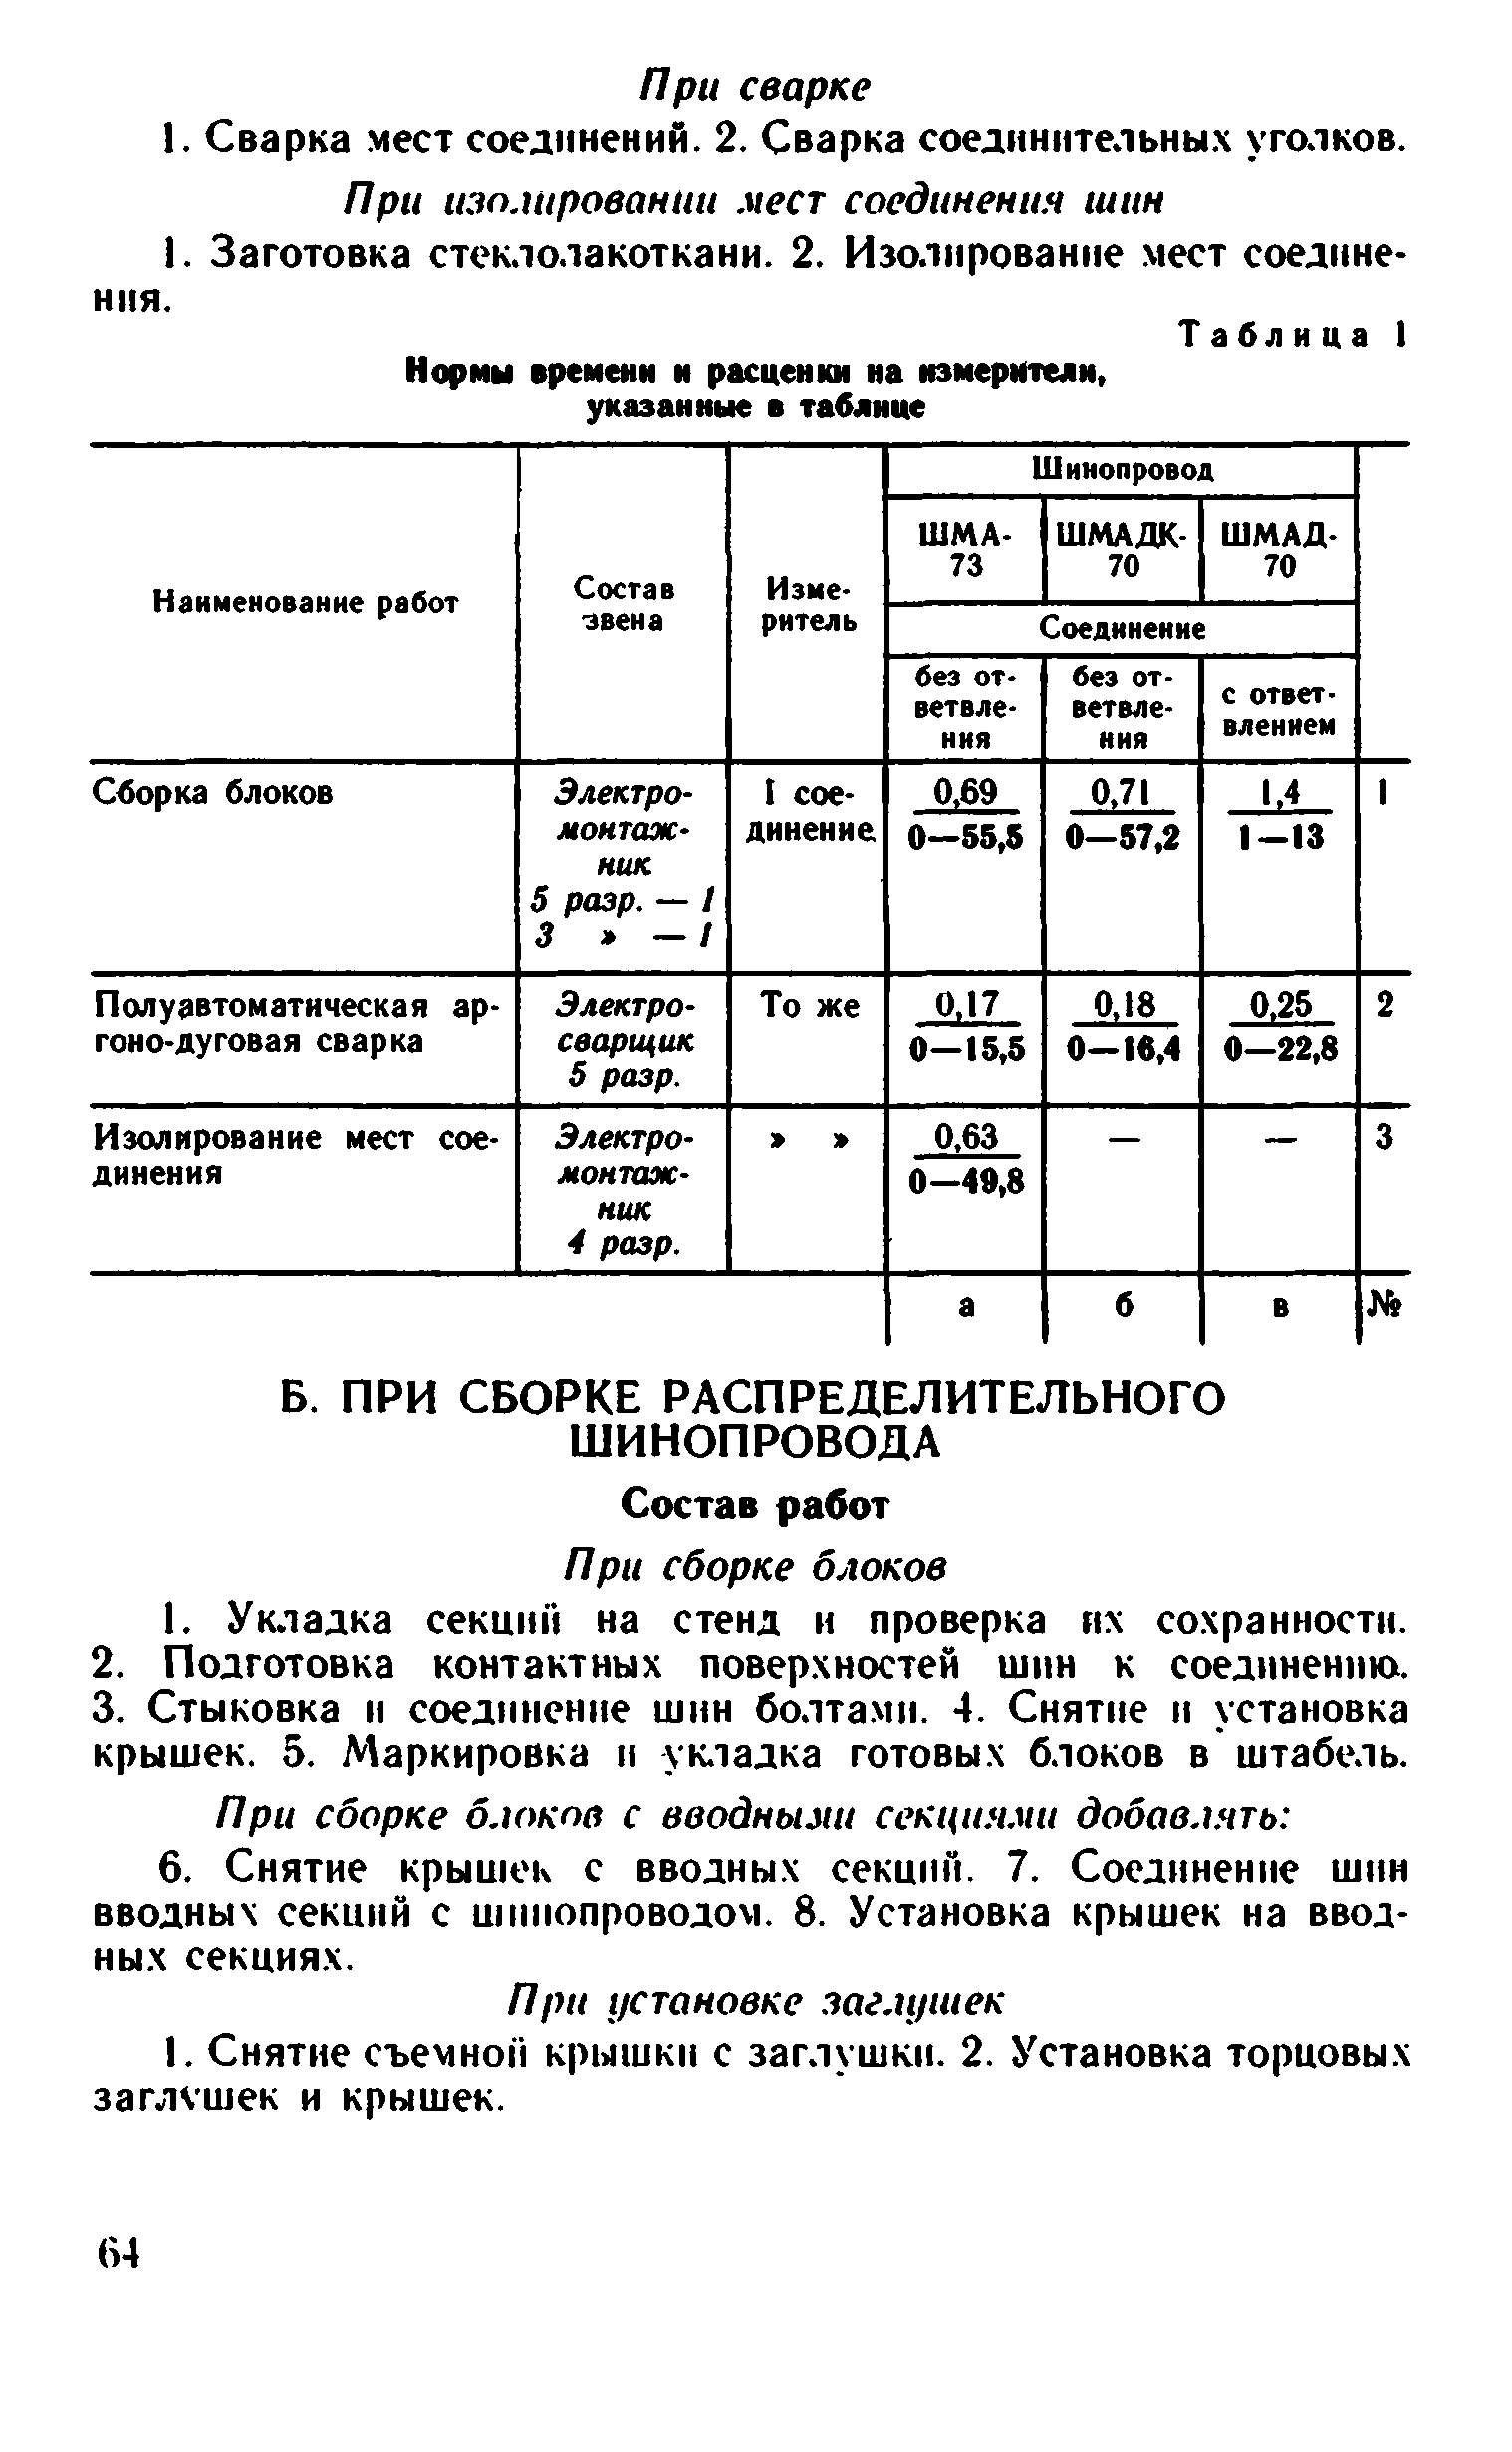 ВНиР В5-2